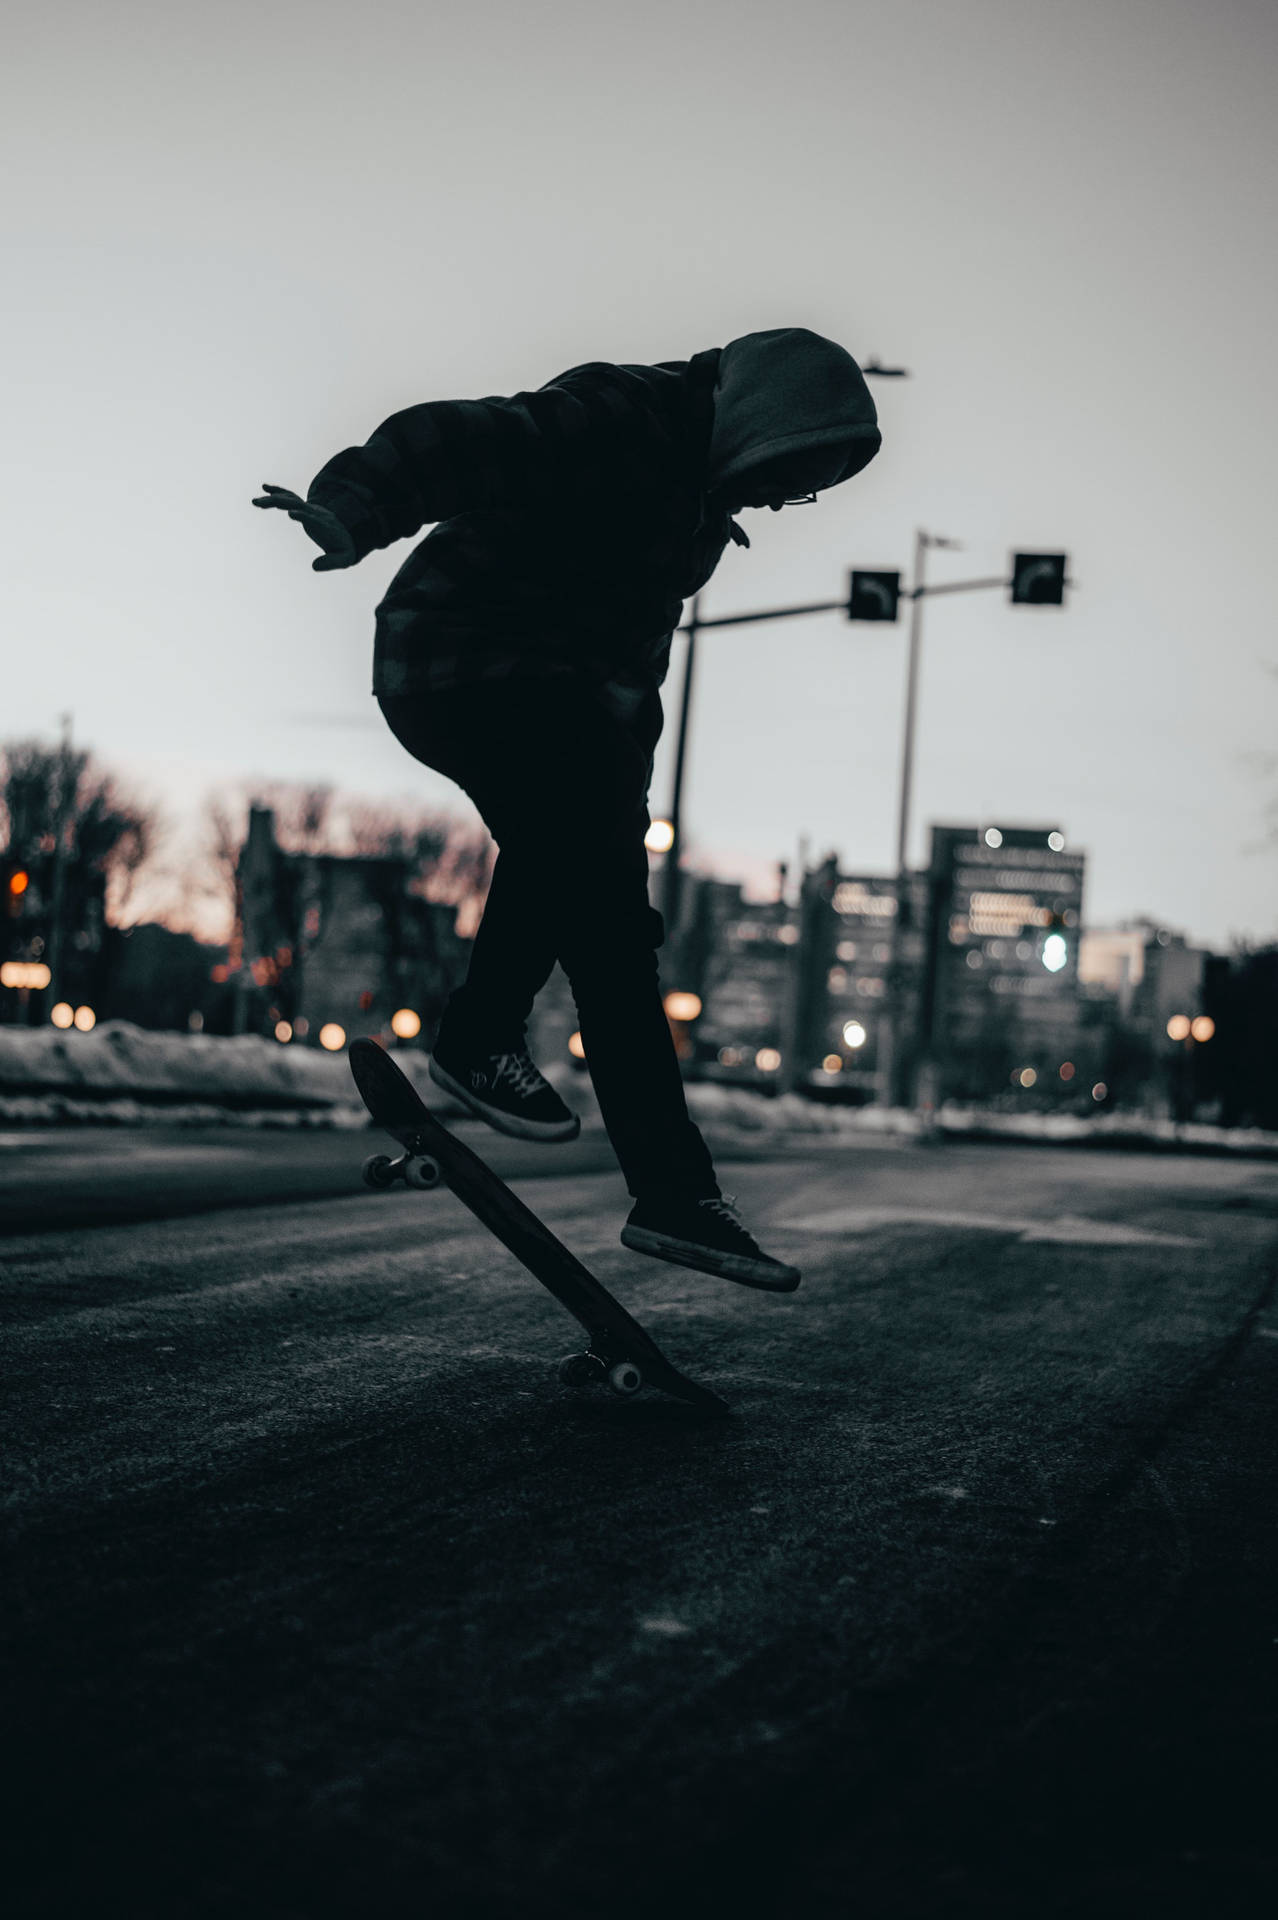 Skater Boy Doing Heelflip